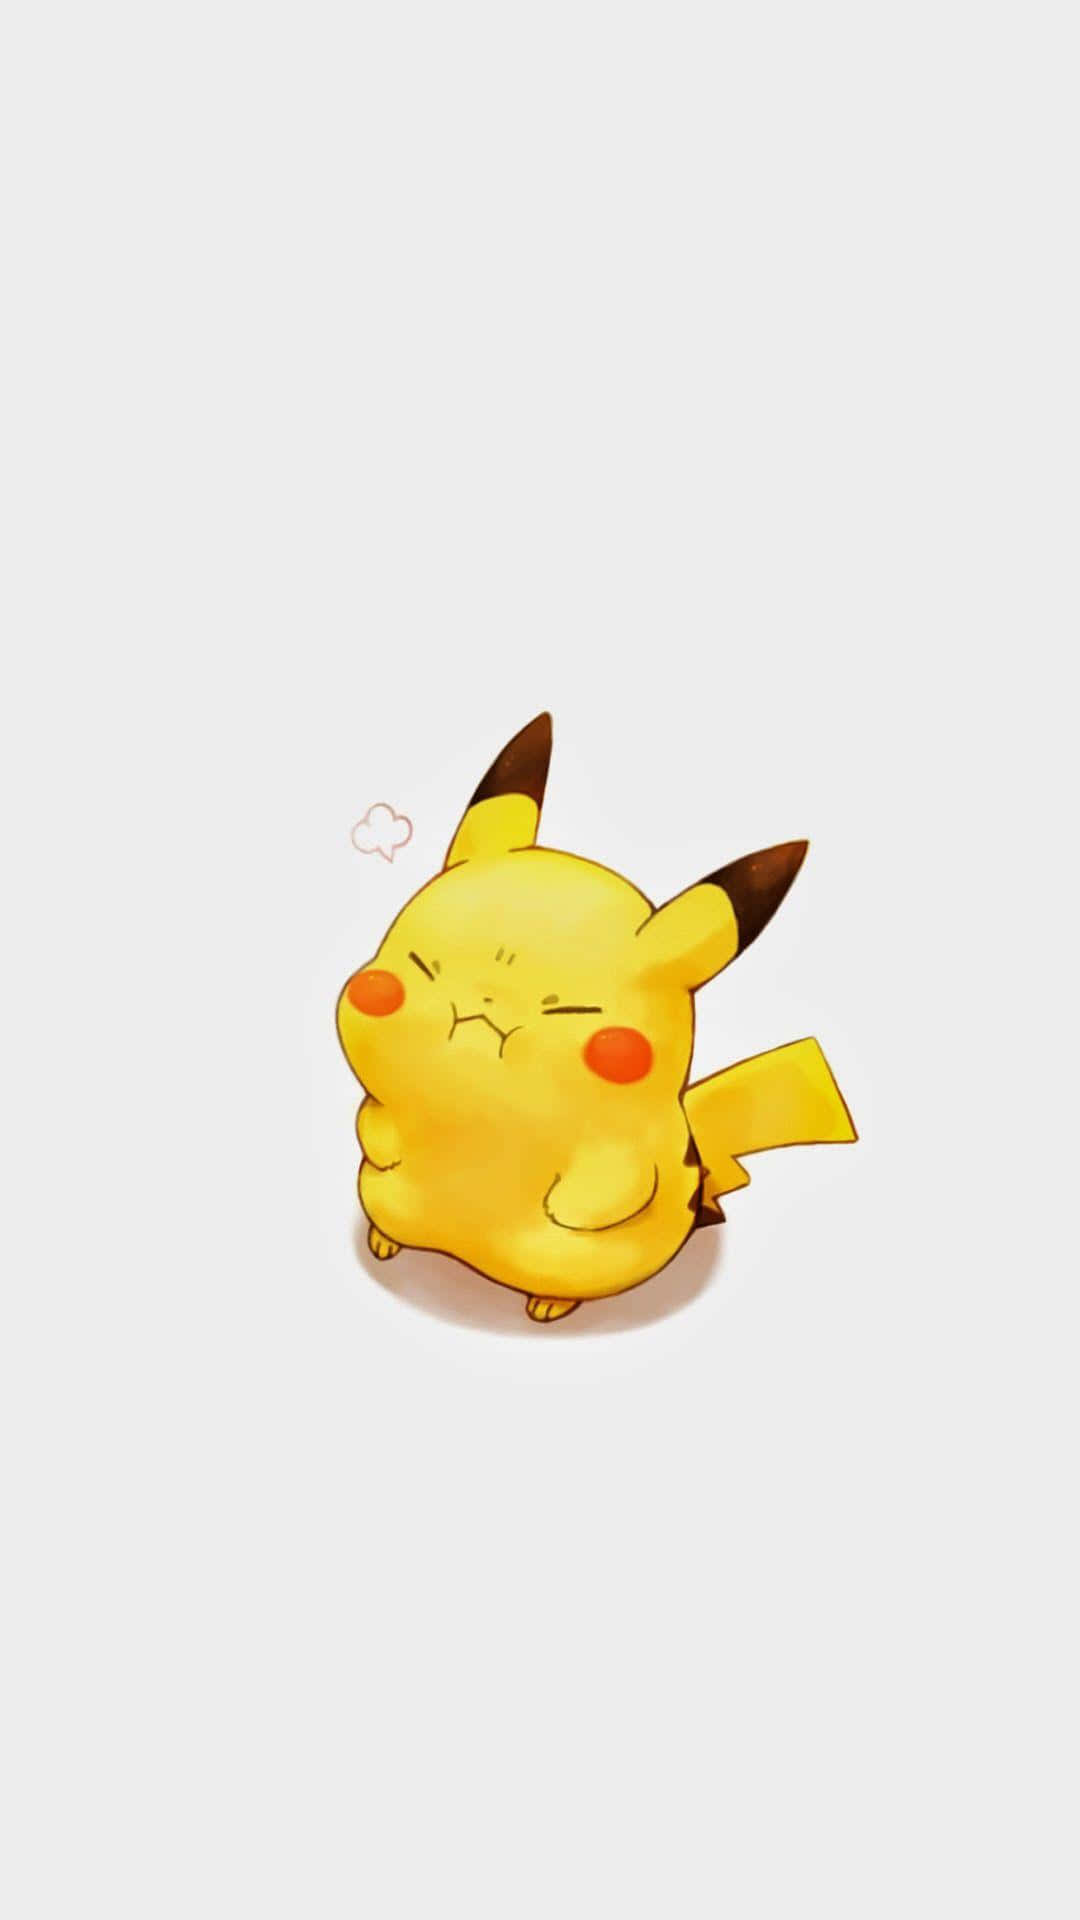 Godnatt,lilla Pikachu Wallpaper